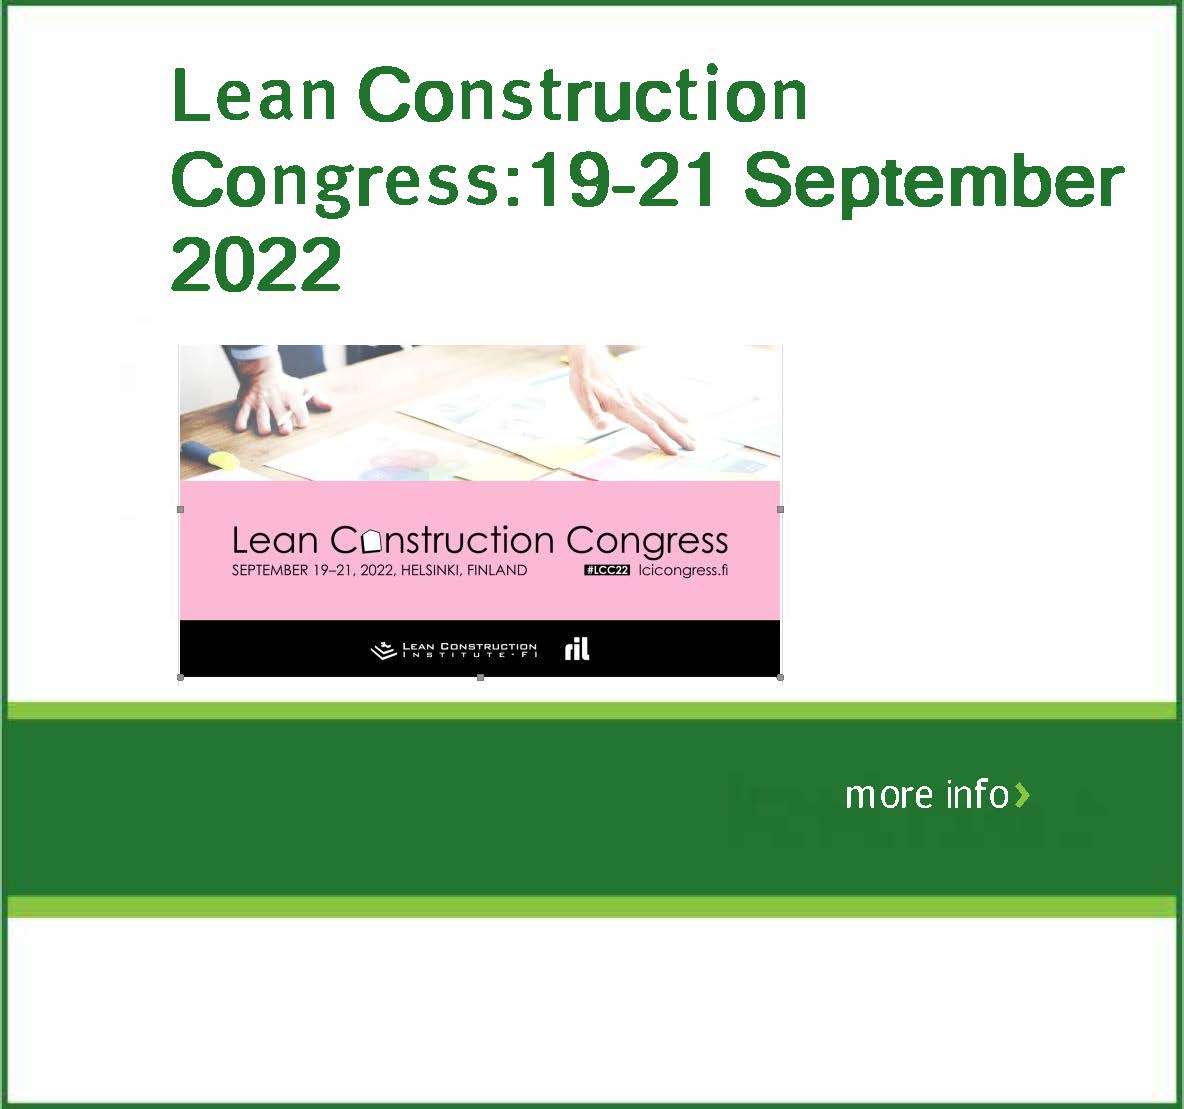 Lean Construction Congress 2022